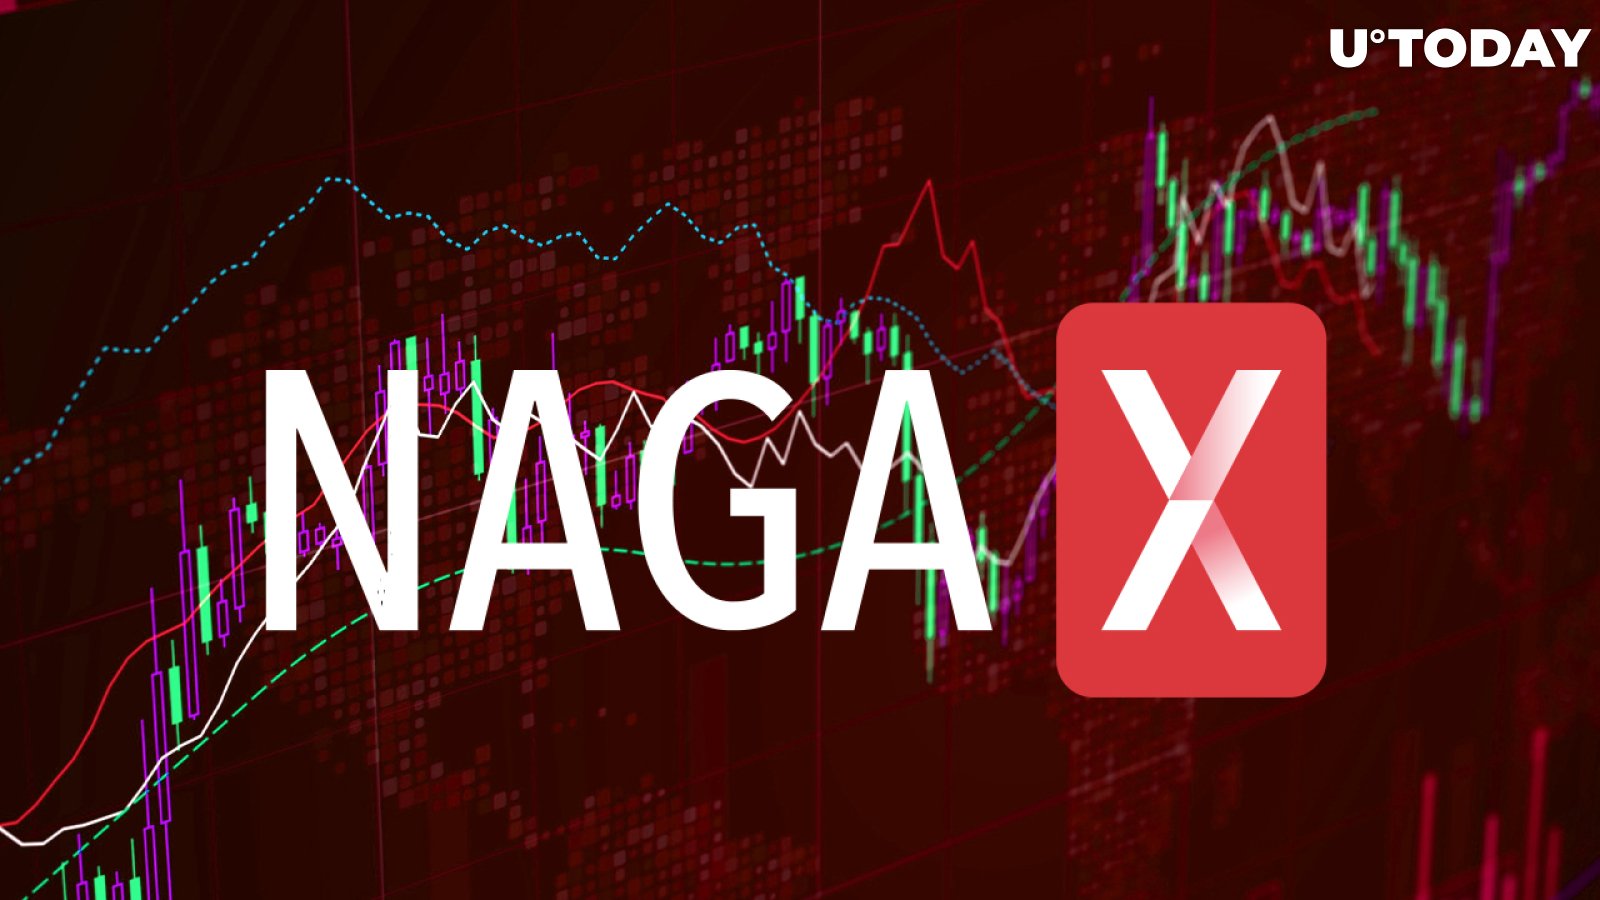 NAGAX Social Trading Platform Launches Staking Instruments